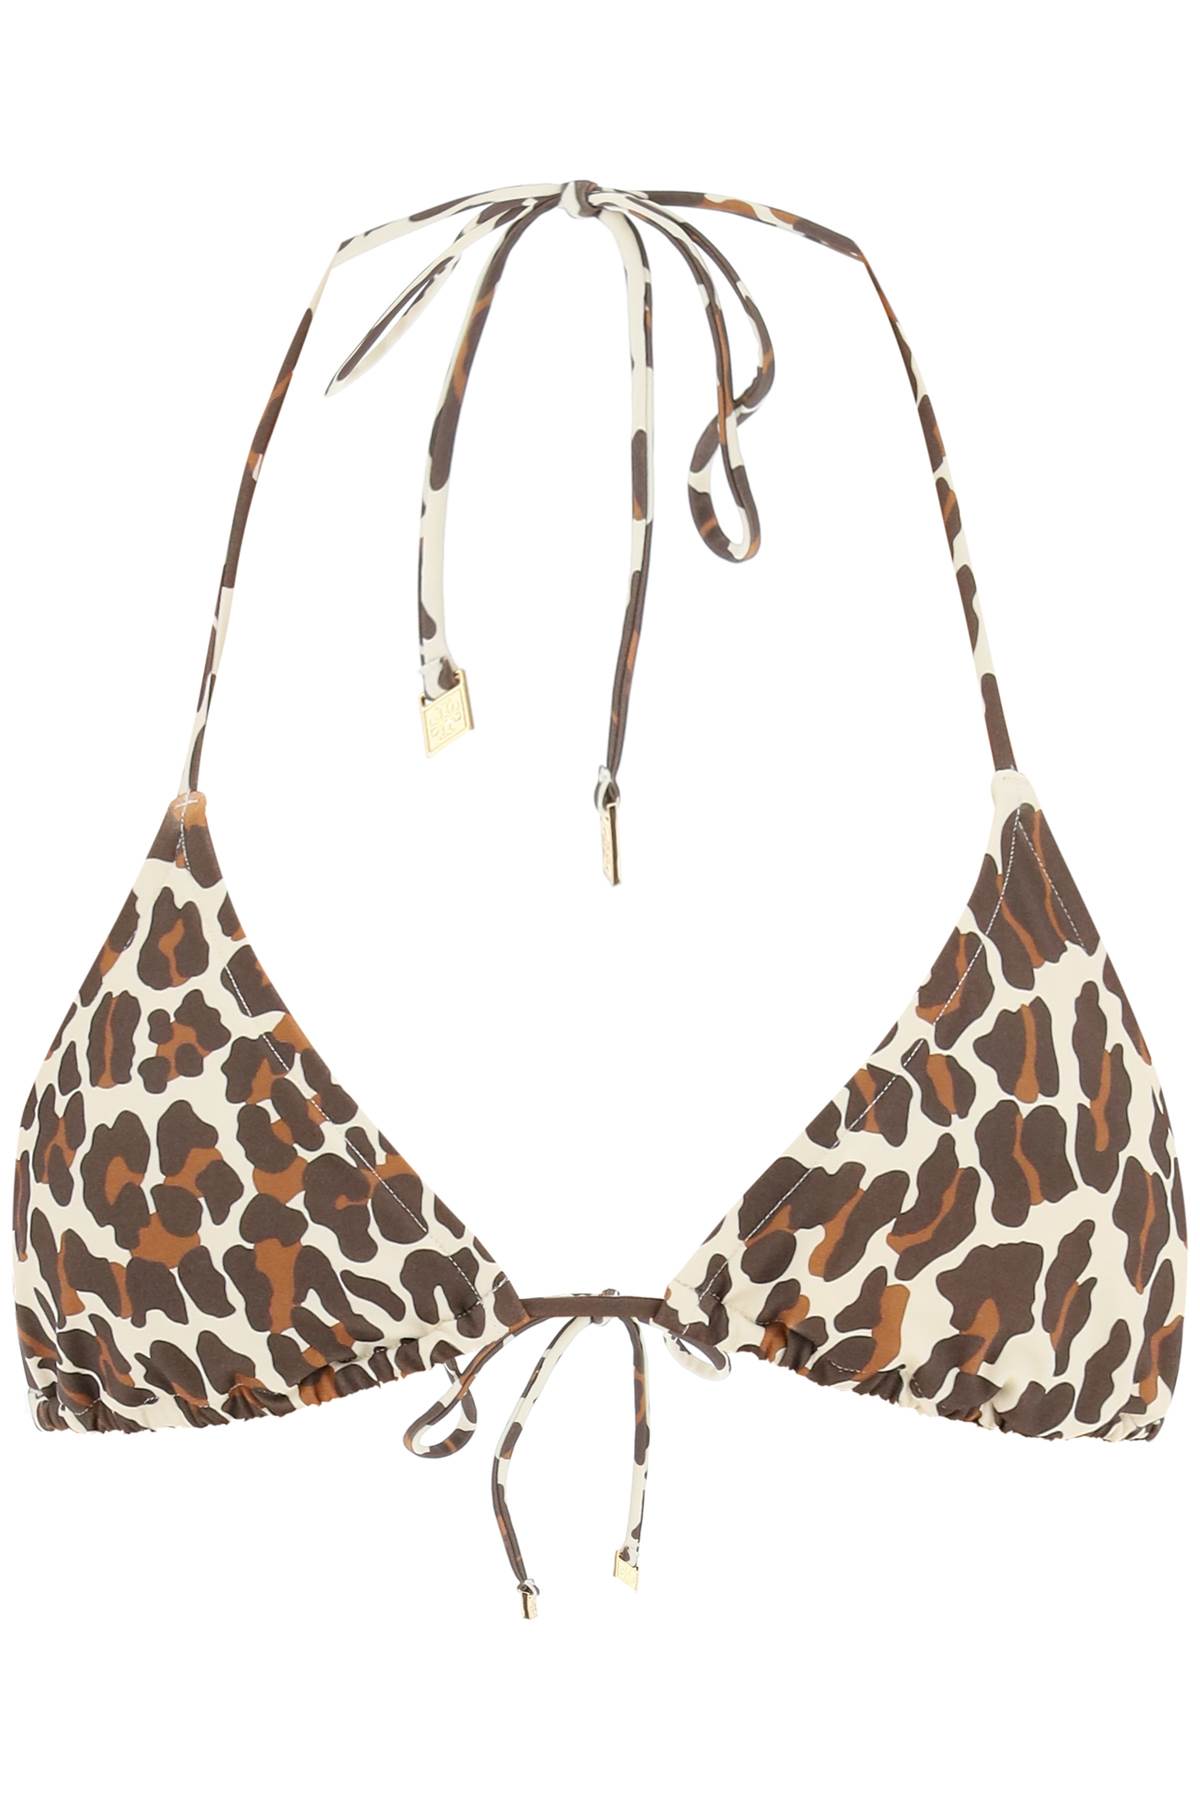 Tory Burch Leopard Printed Bikini Top